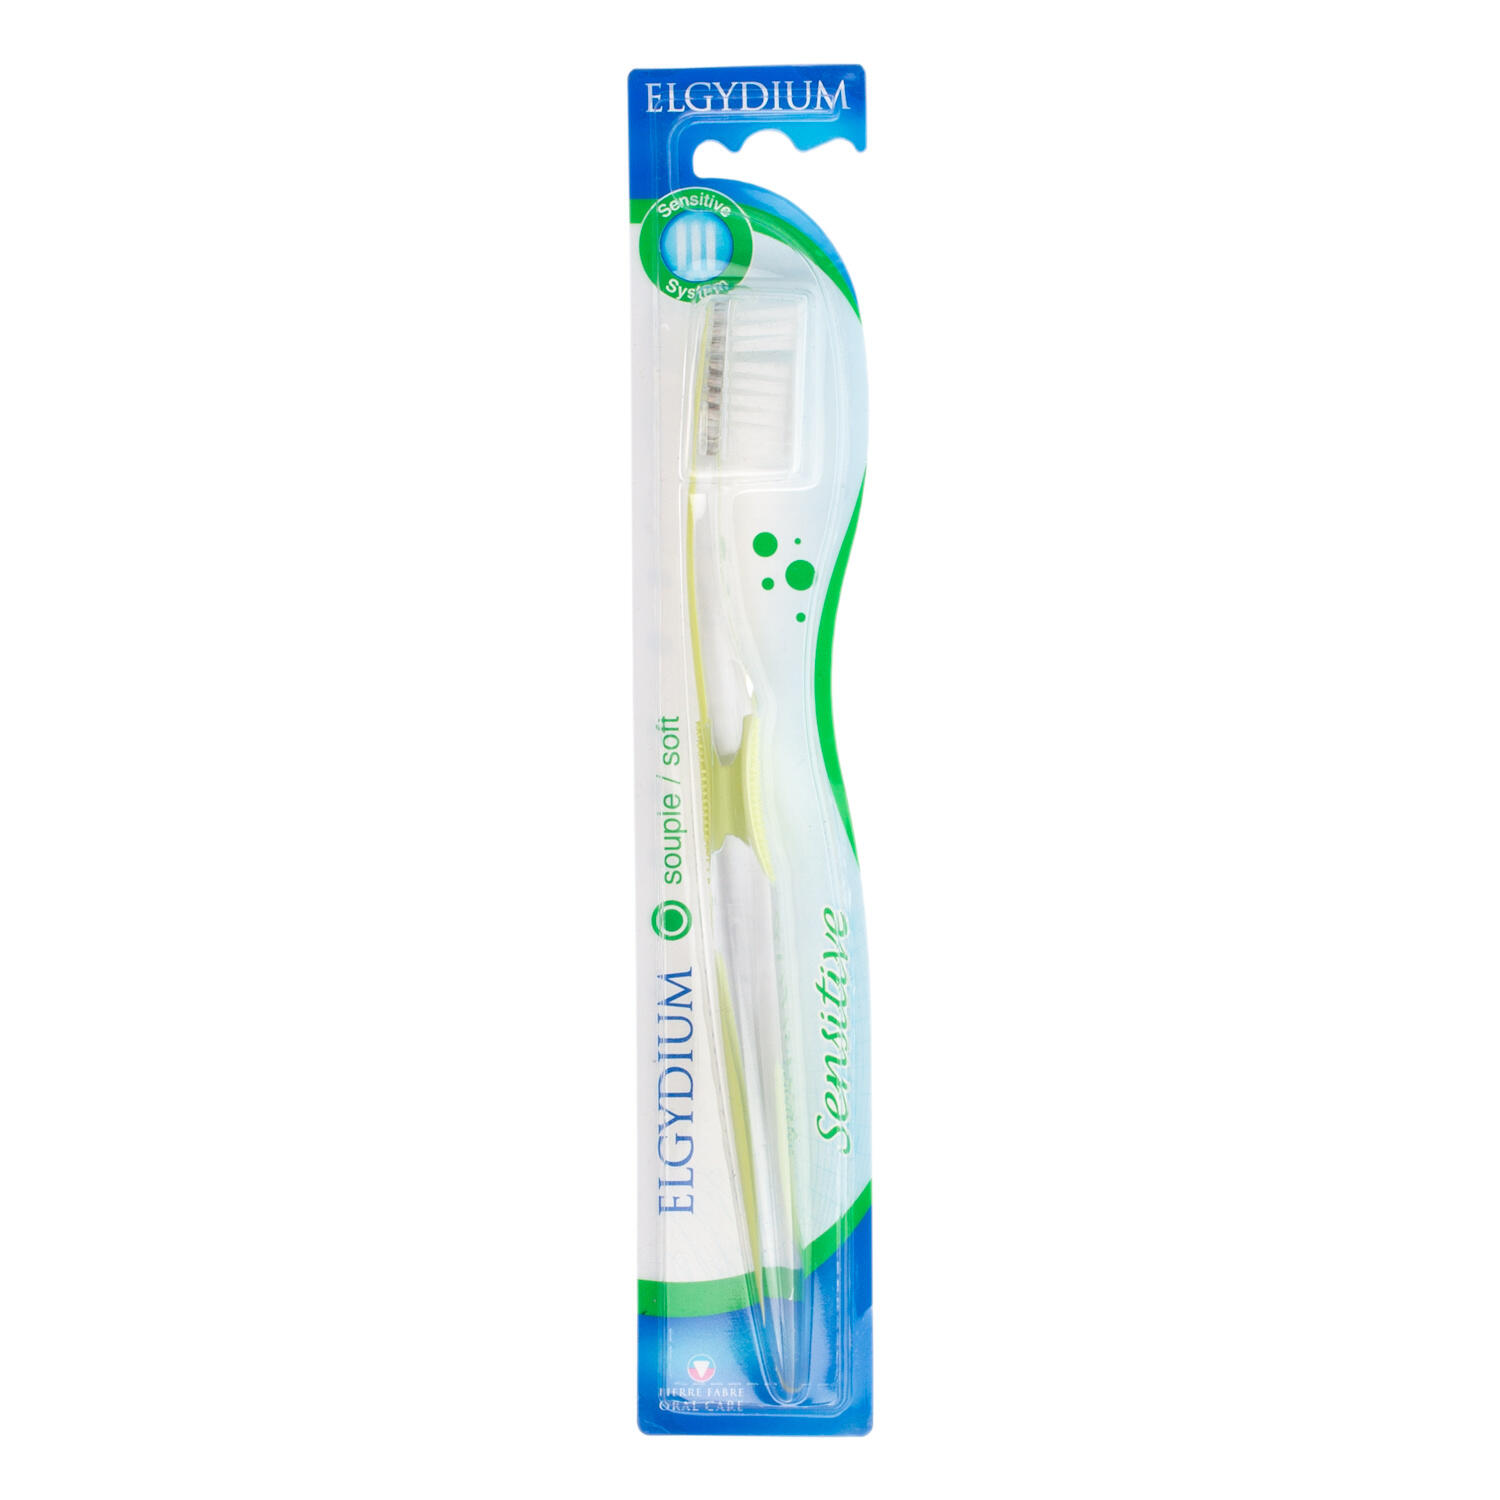 Elgydium Sensitive Toothbrush Soft Review